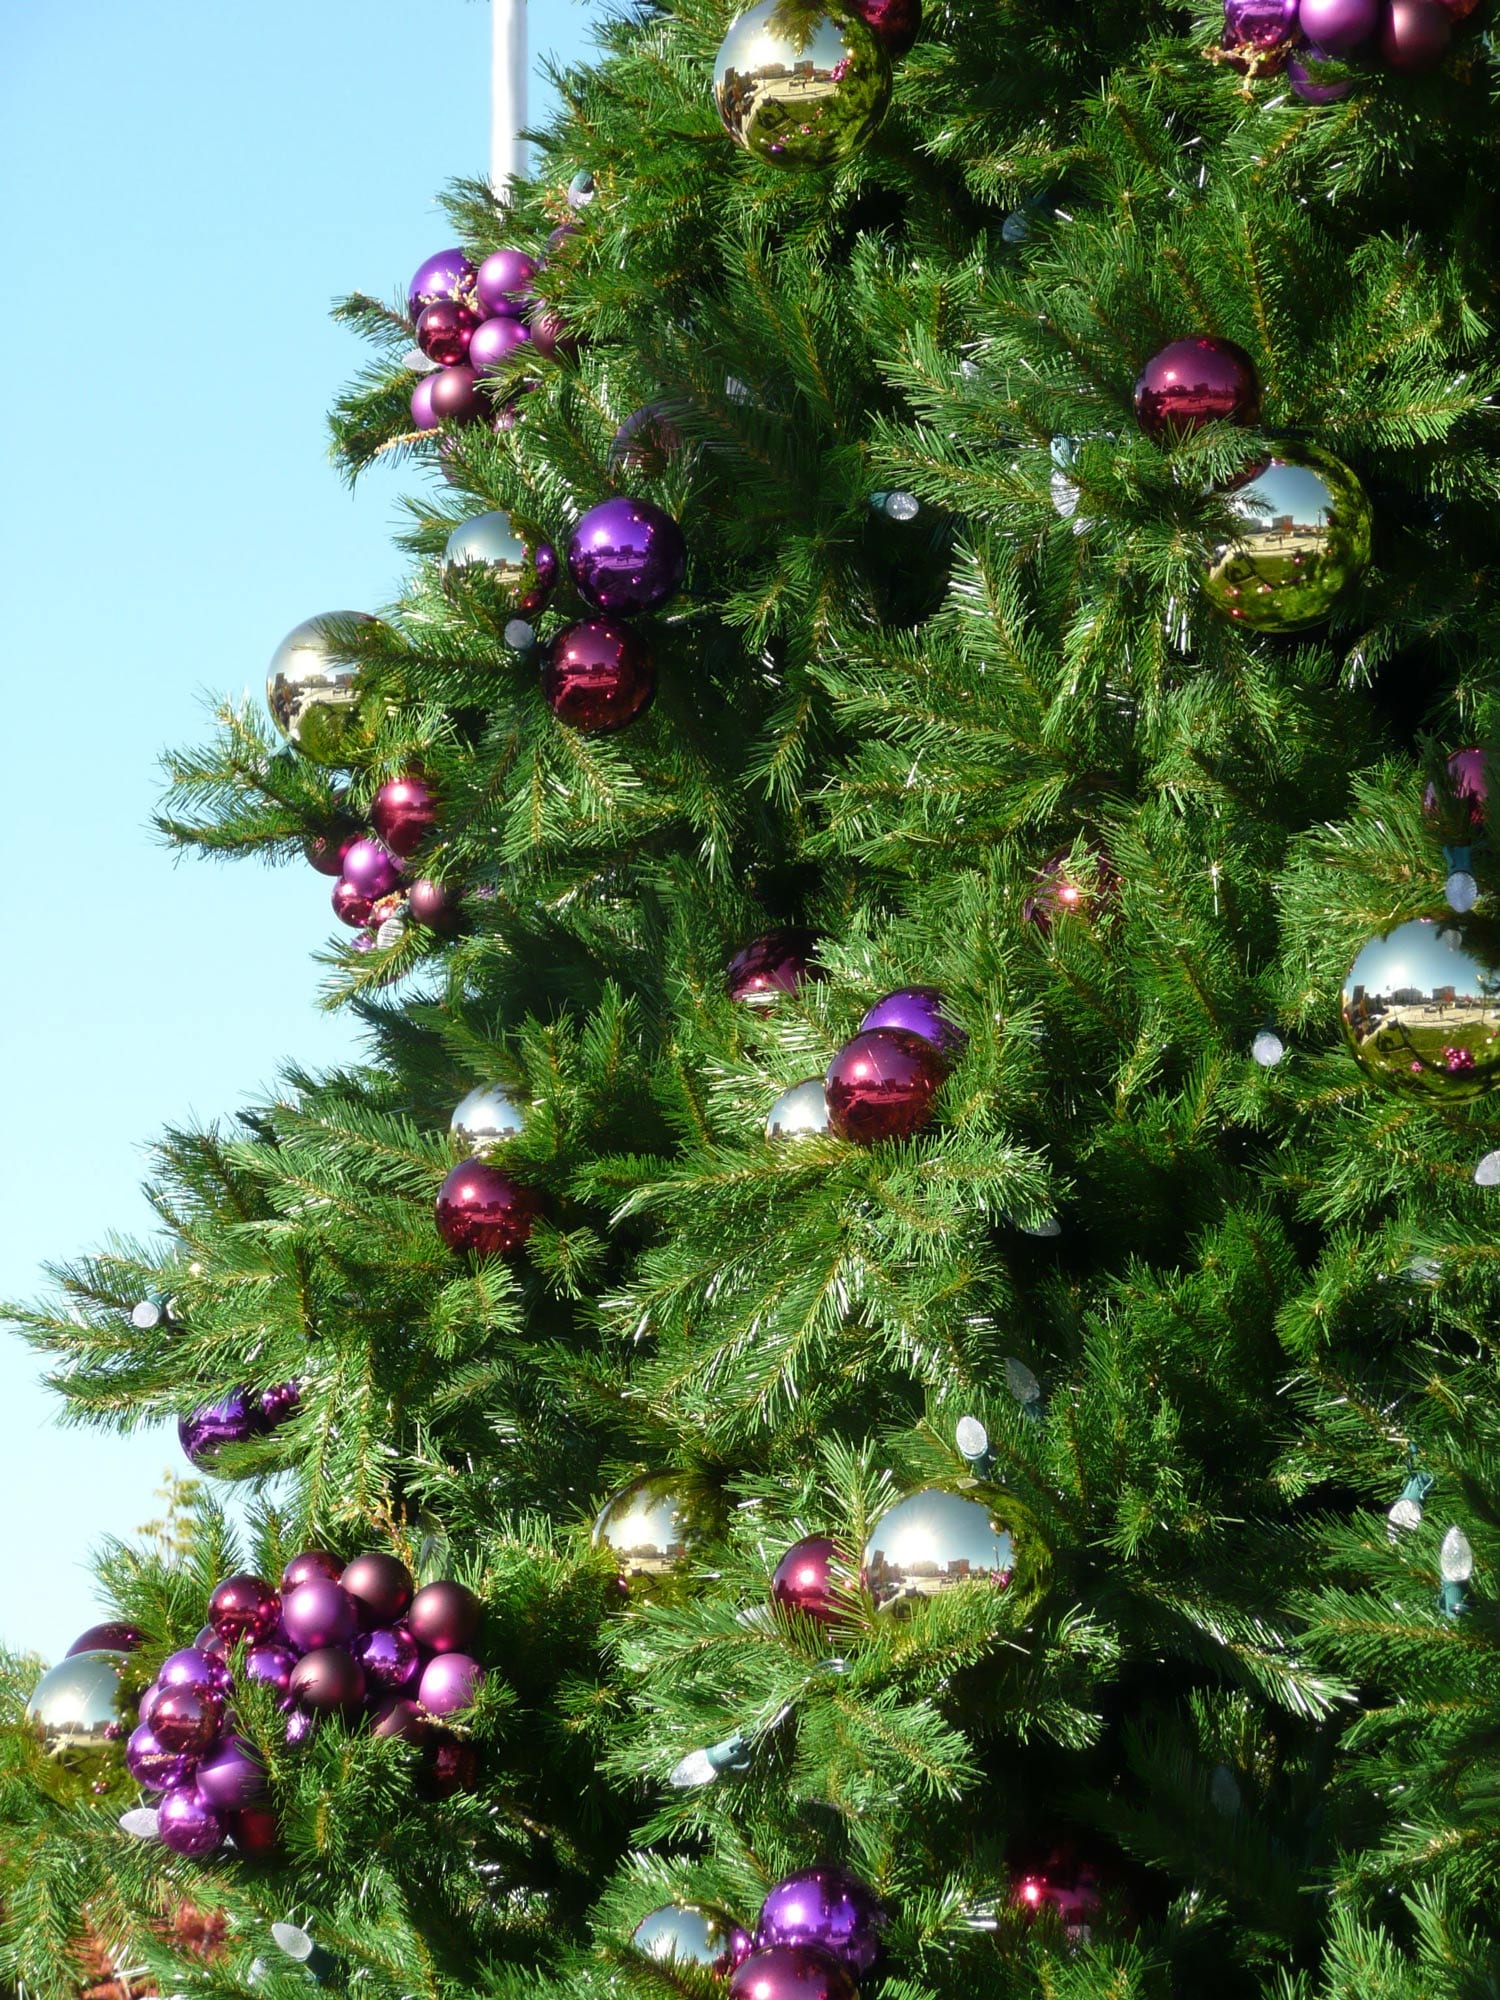 grape ornaments on Christmas Tree